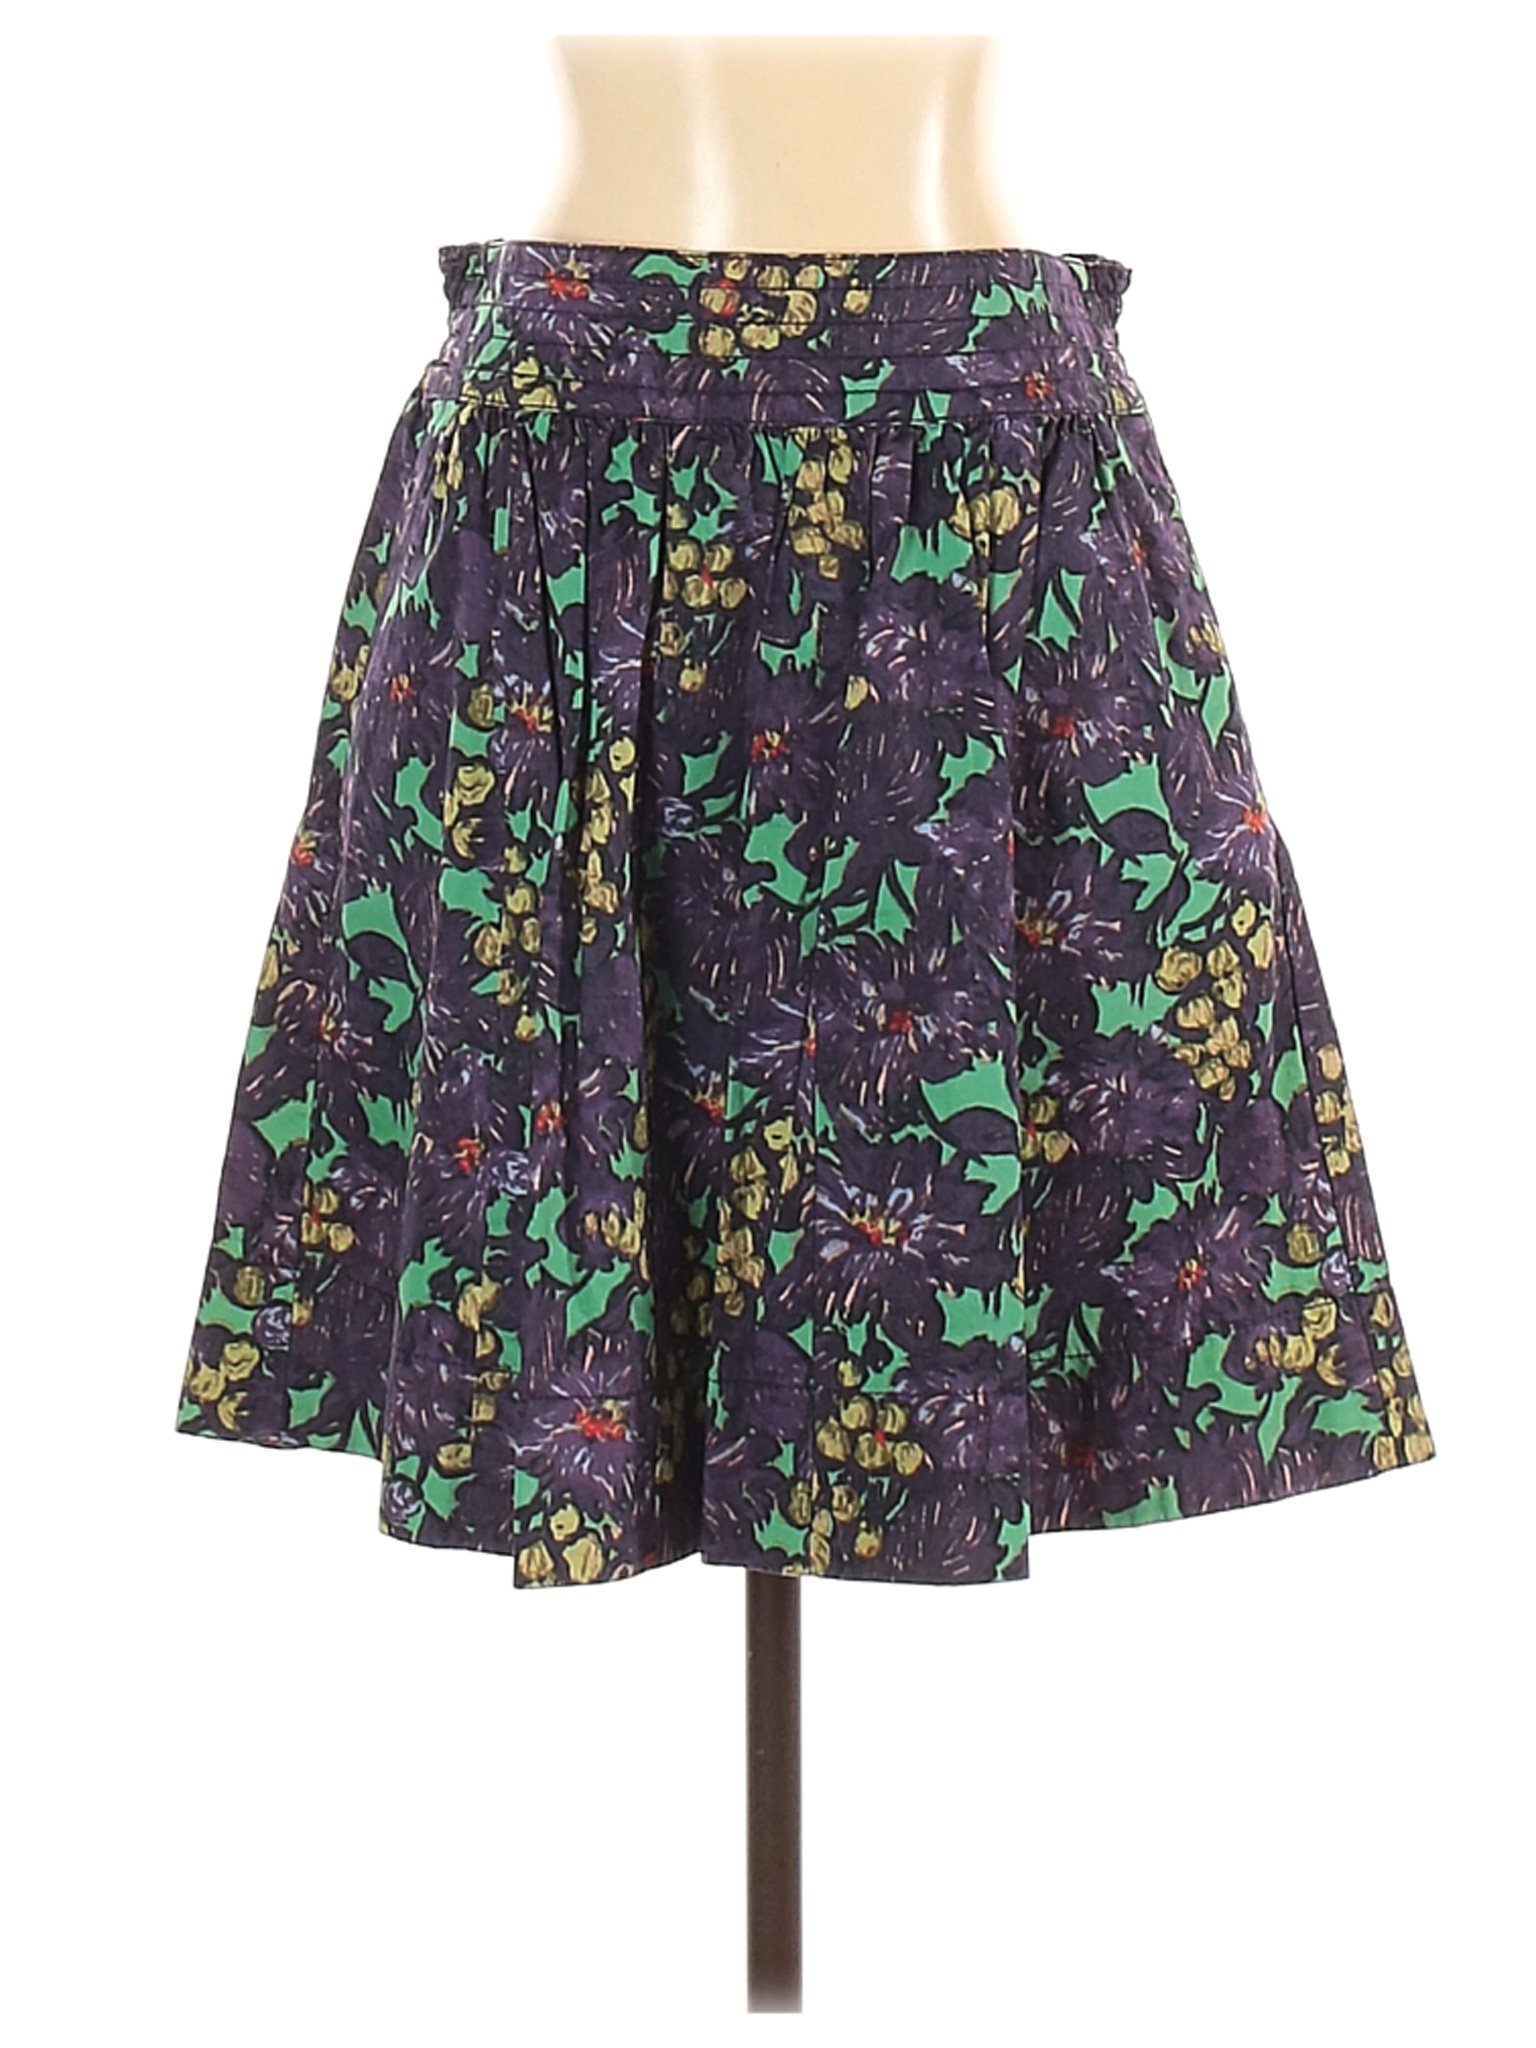 J.Crew Women Purple Casual Skirt 4 | eBay